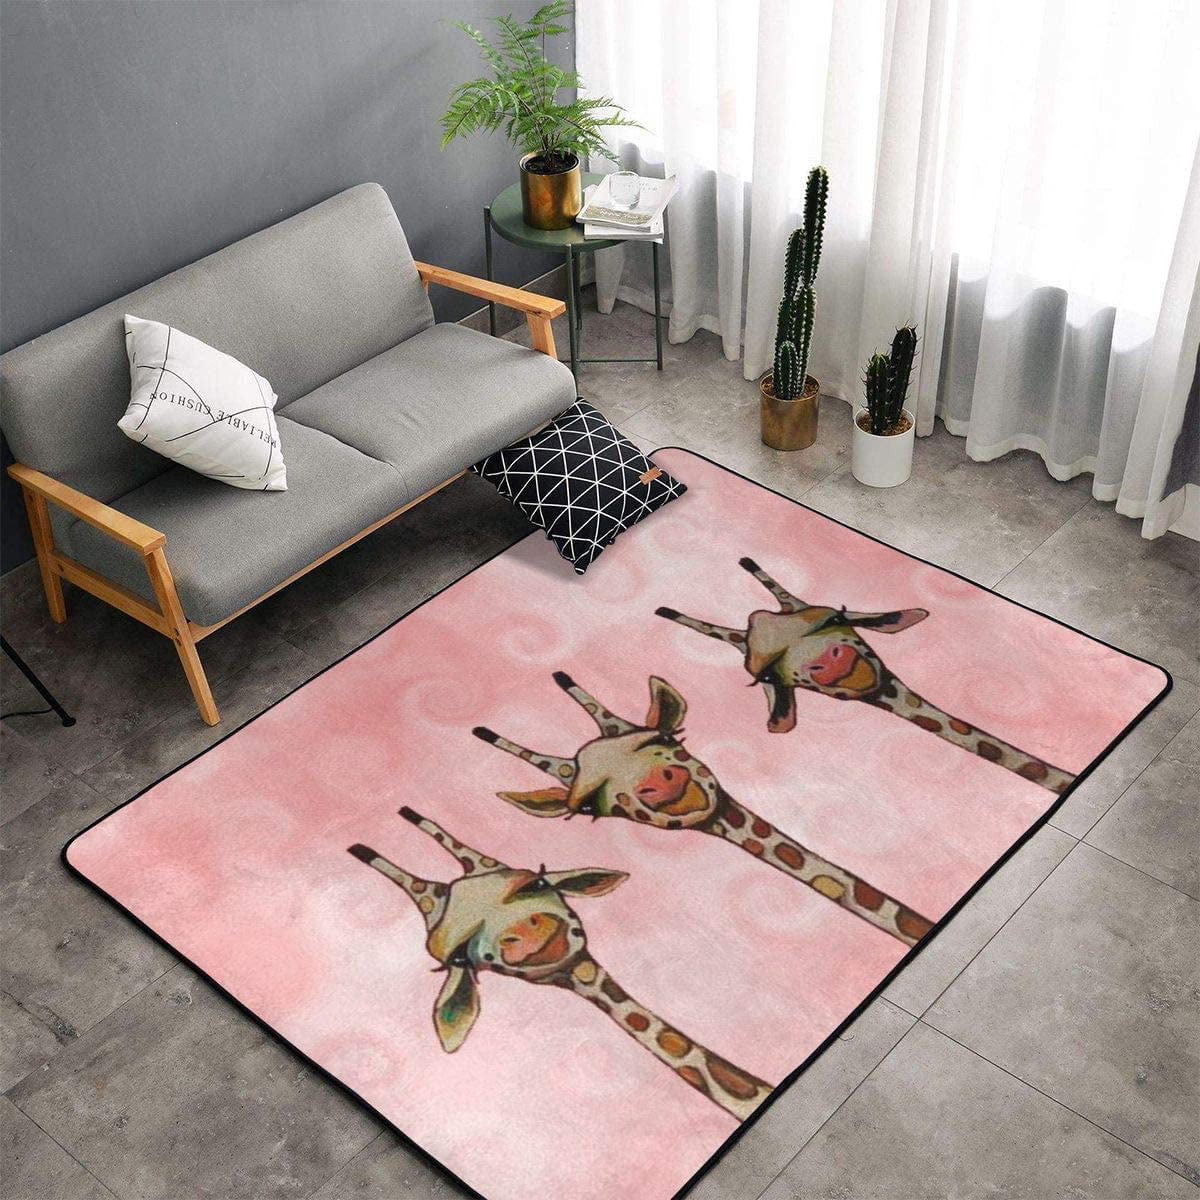 Round Area Rugs MatFlamingo Pink Cartoon Indoor/Outdoor Rugs Circular Floor mat for Dining Dorm Room Bedroom Home Office 3 feet 